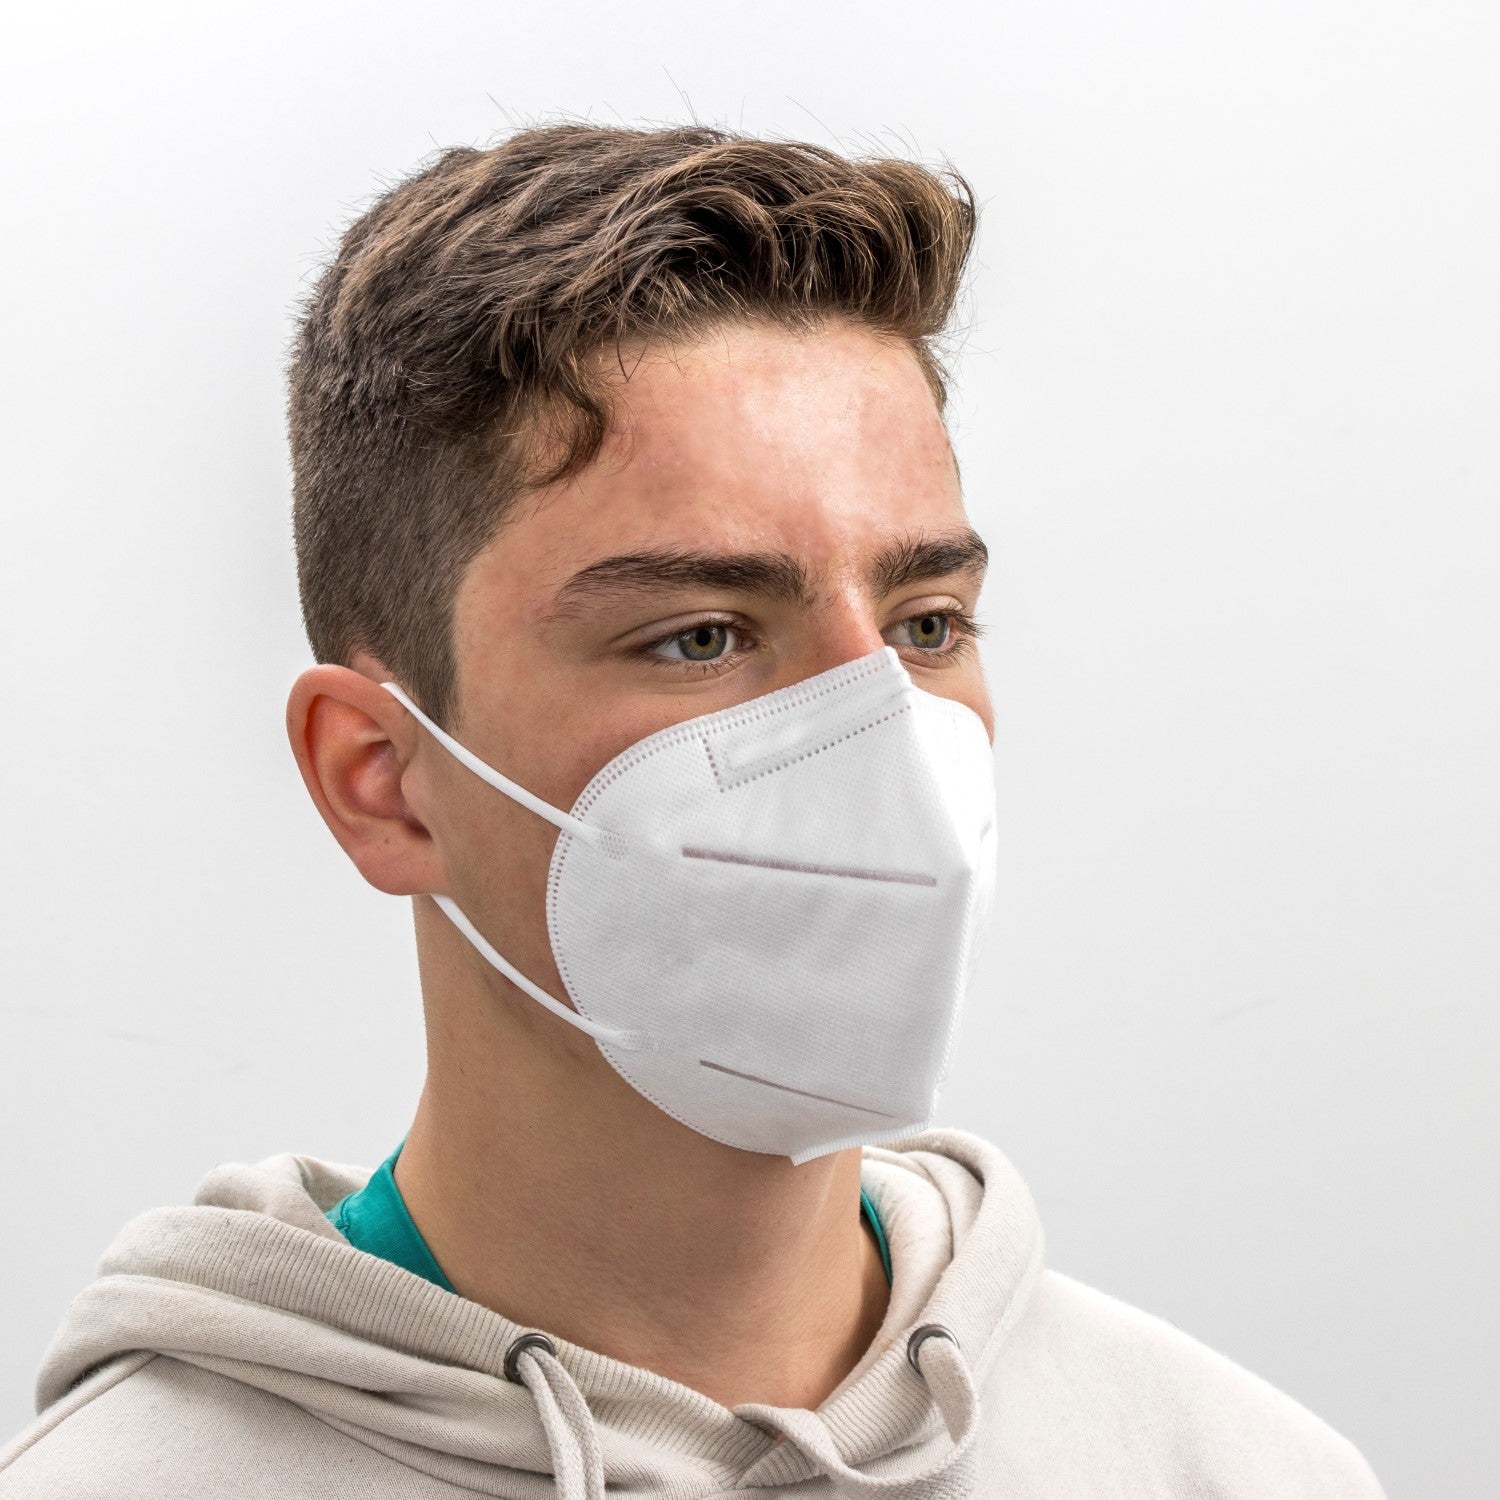 Protector 3 FFP3 Respirator Masks - Ear Loop Multi-Fit **EXPIRE DECEMBER 2023**